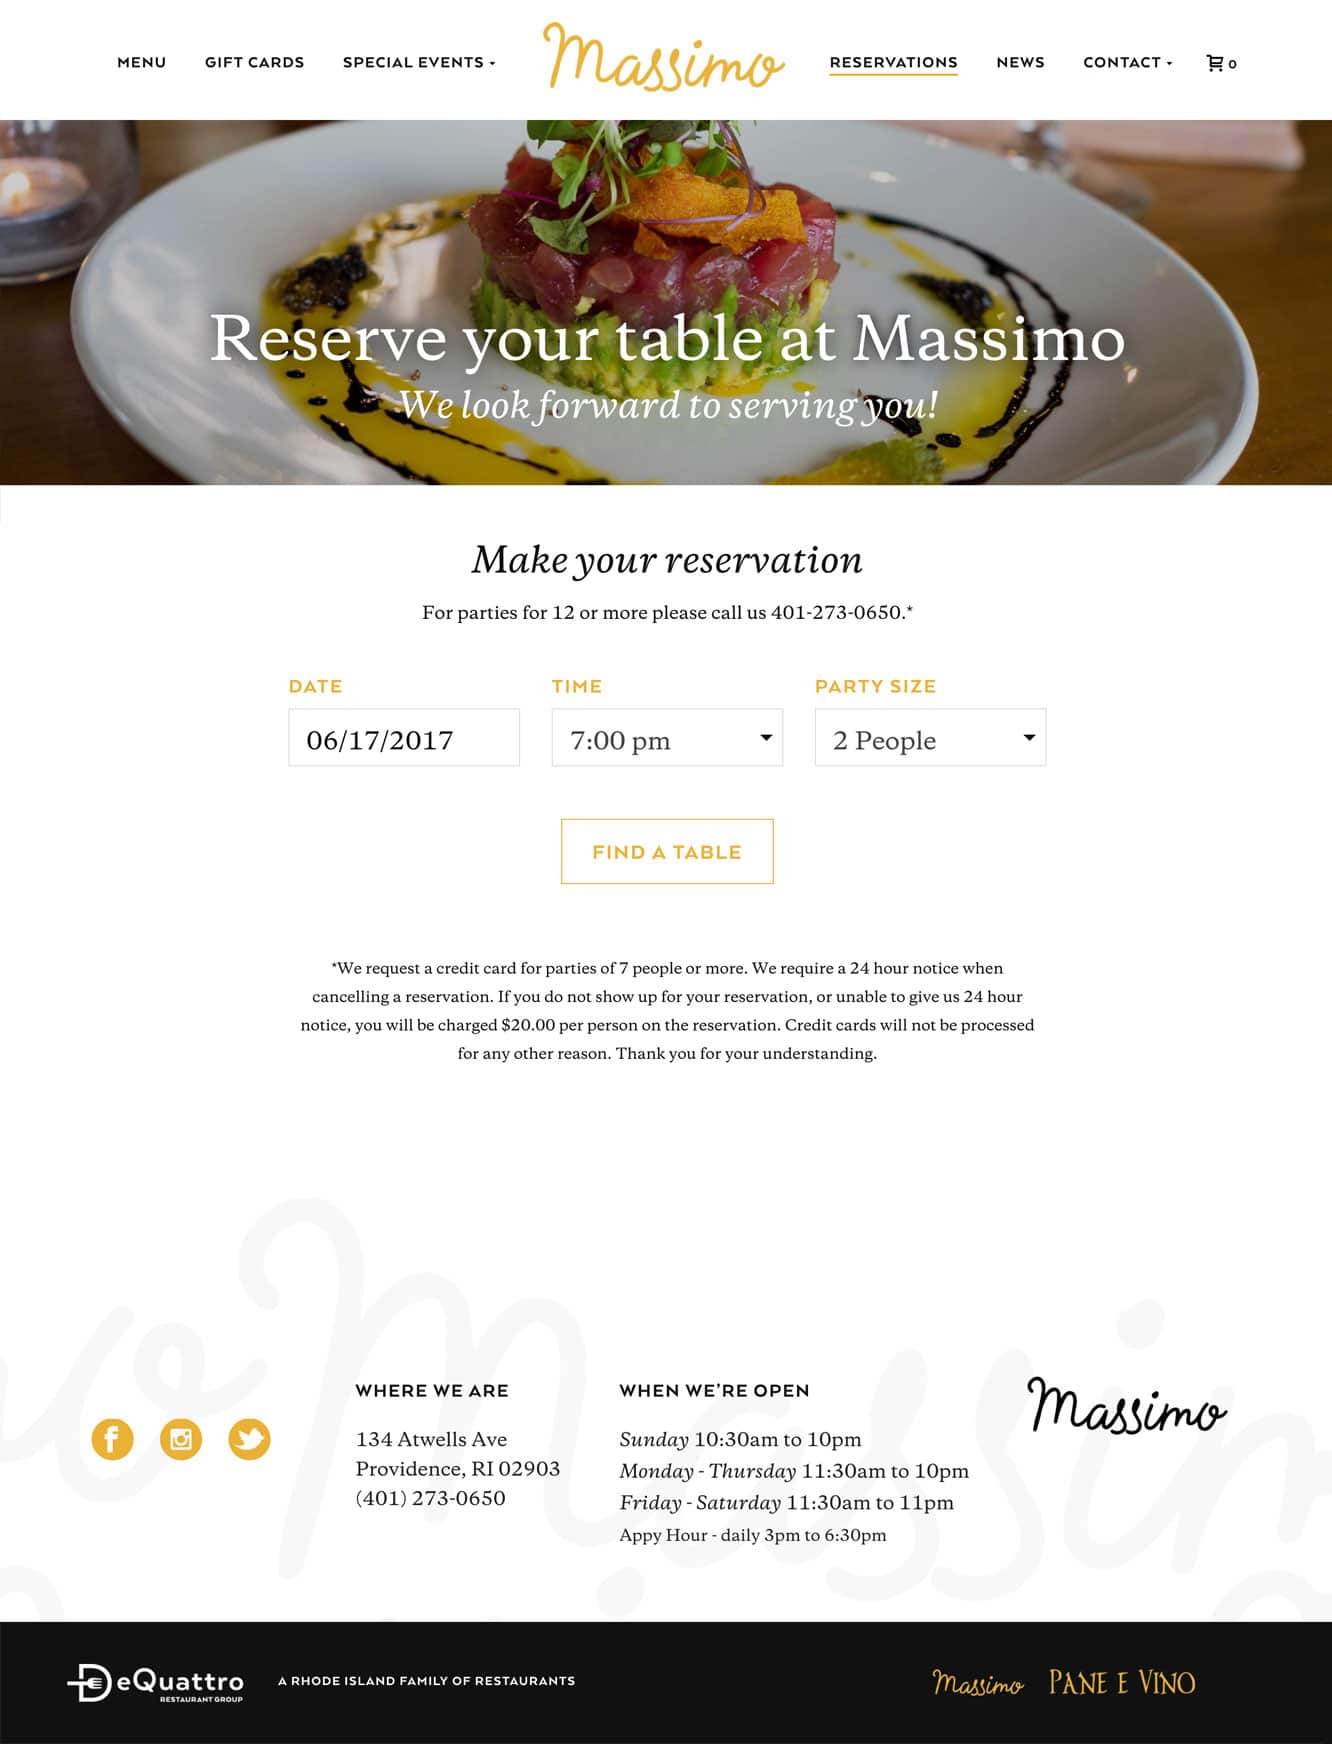 RI Italian restaurant website design and development